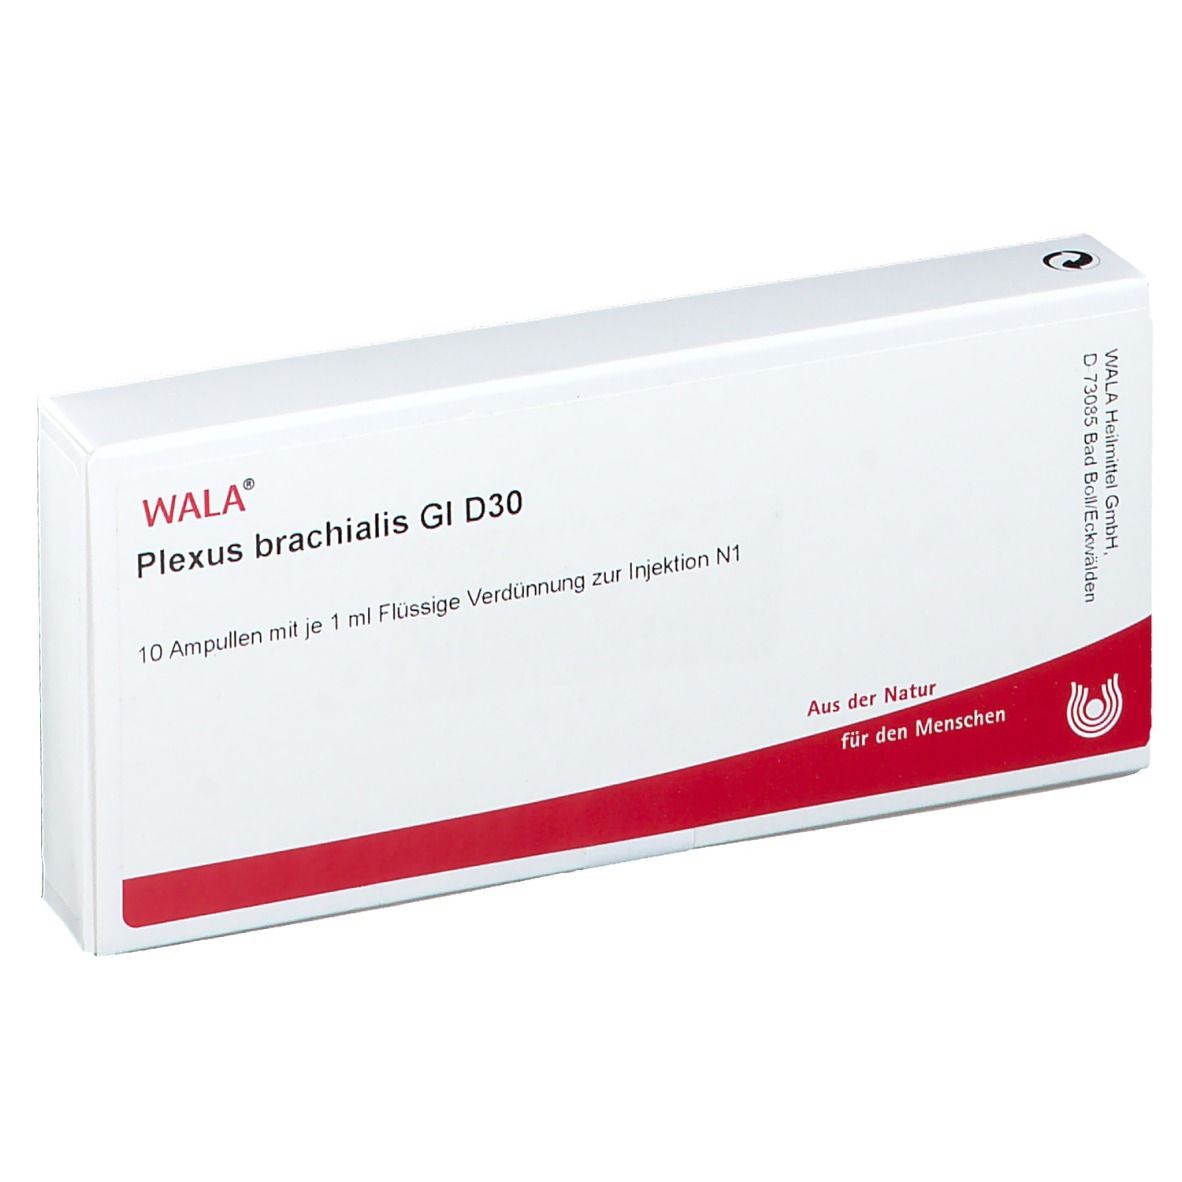 Wala® Plexus brachialis Gl D 30